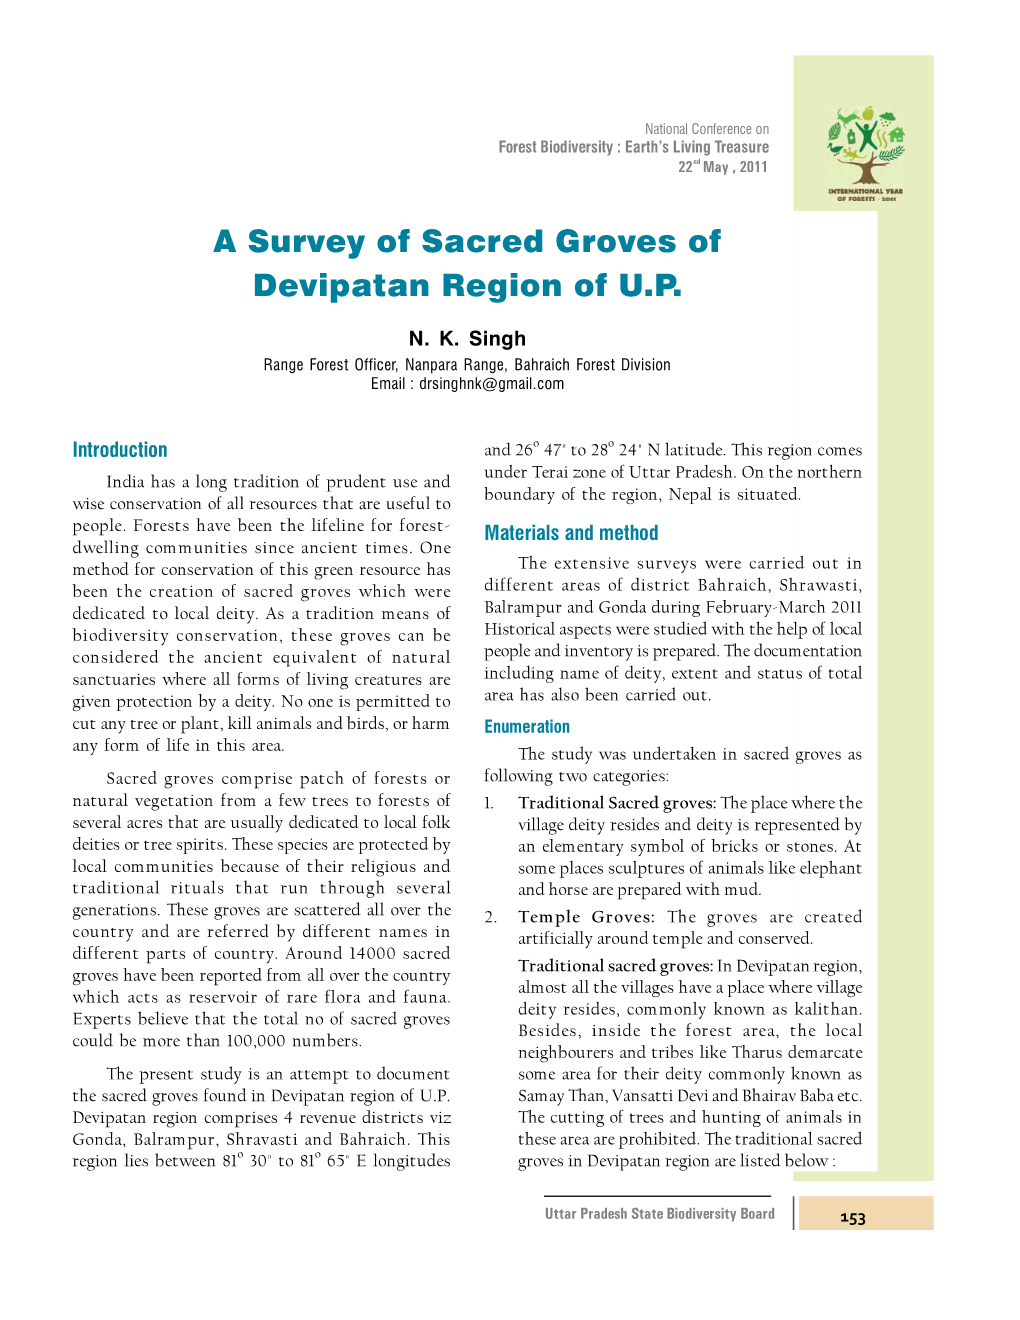 A Survey of Sacred Groves of Devipatan Region of U.P